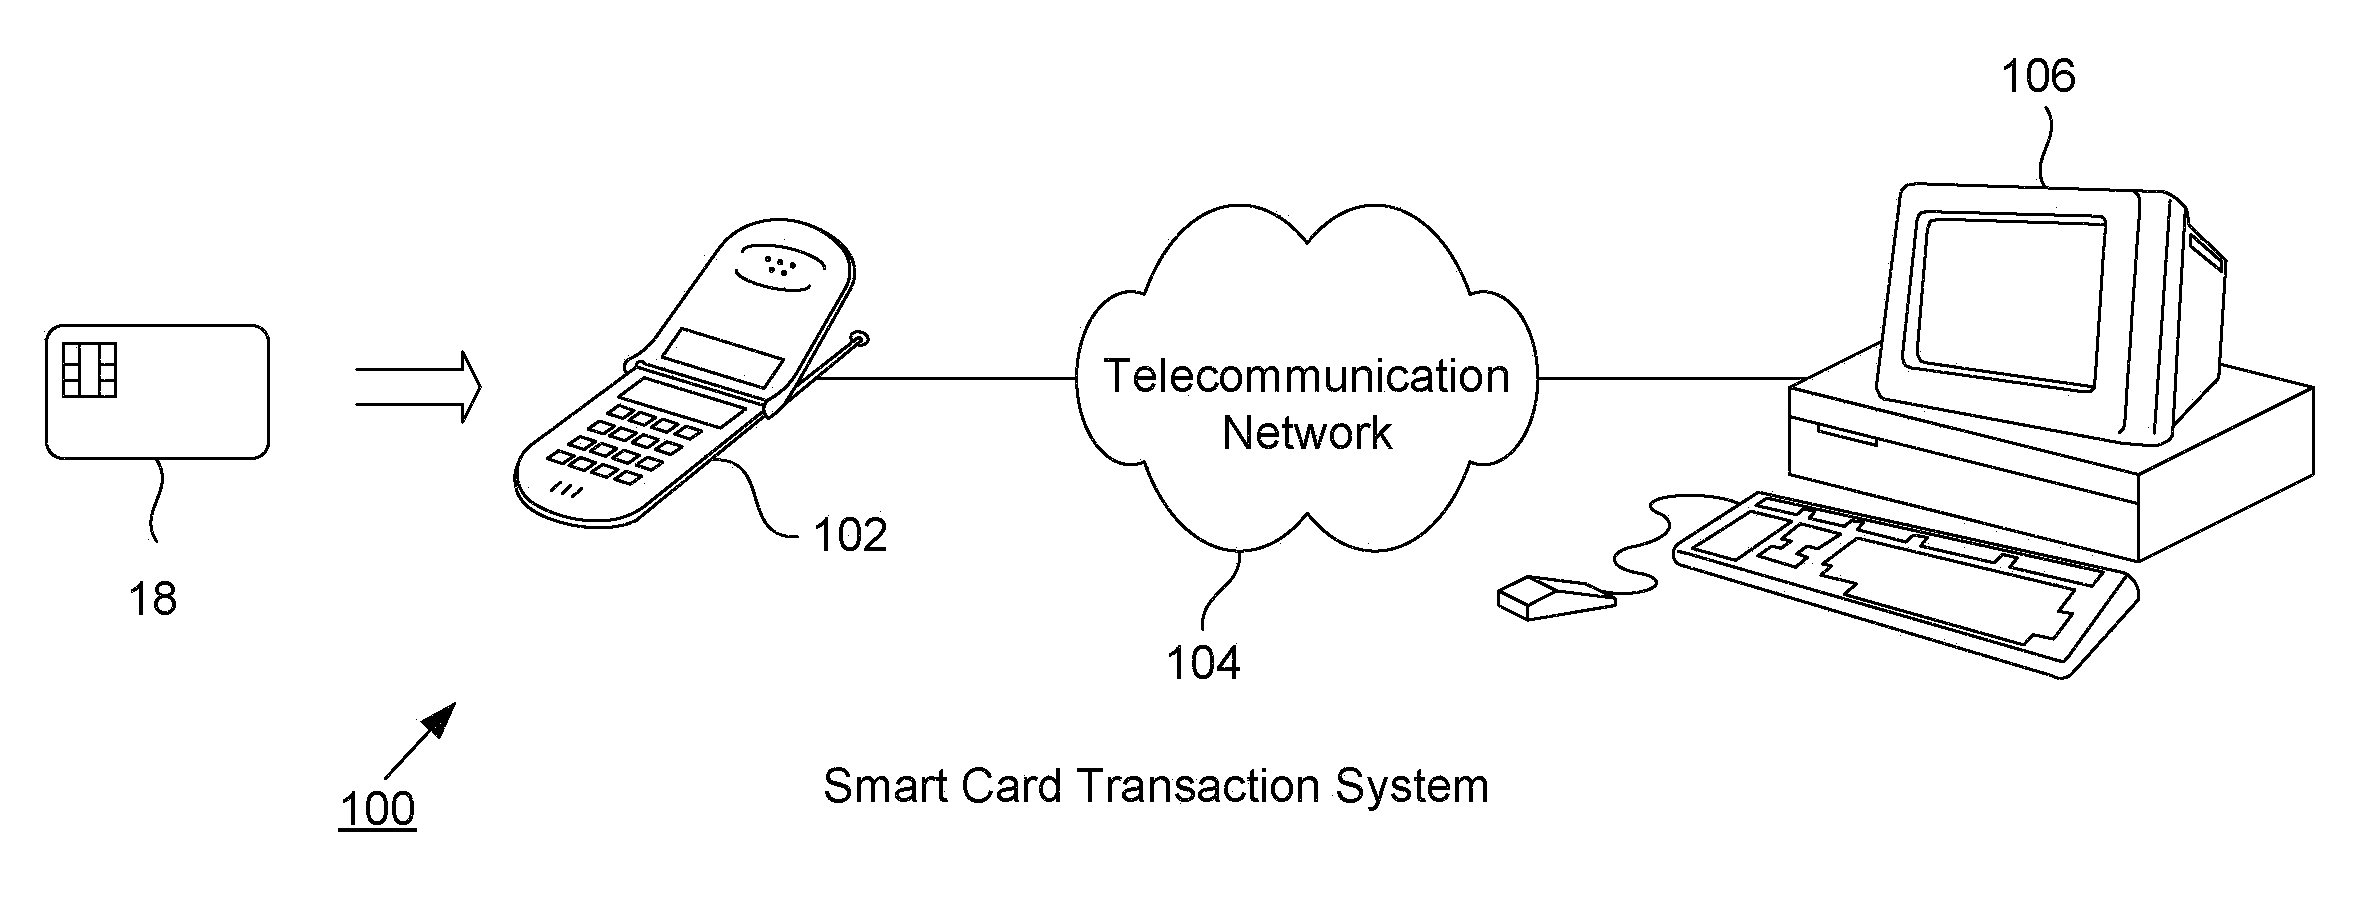 Smart card transactions using wireless telecommunications network